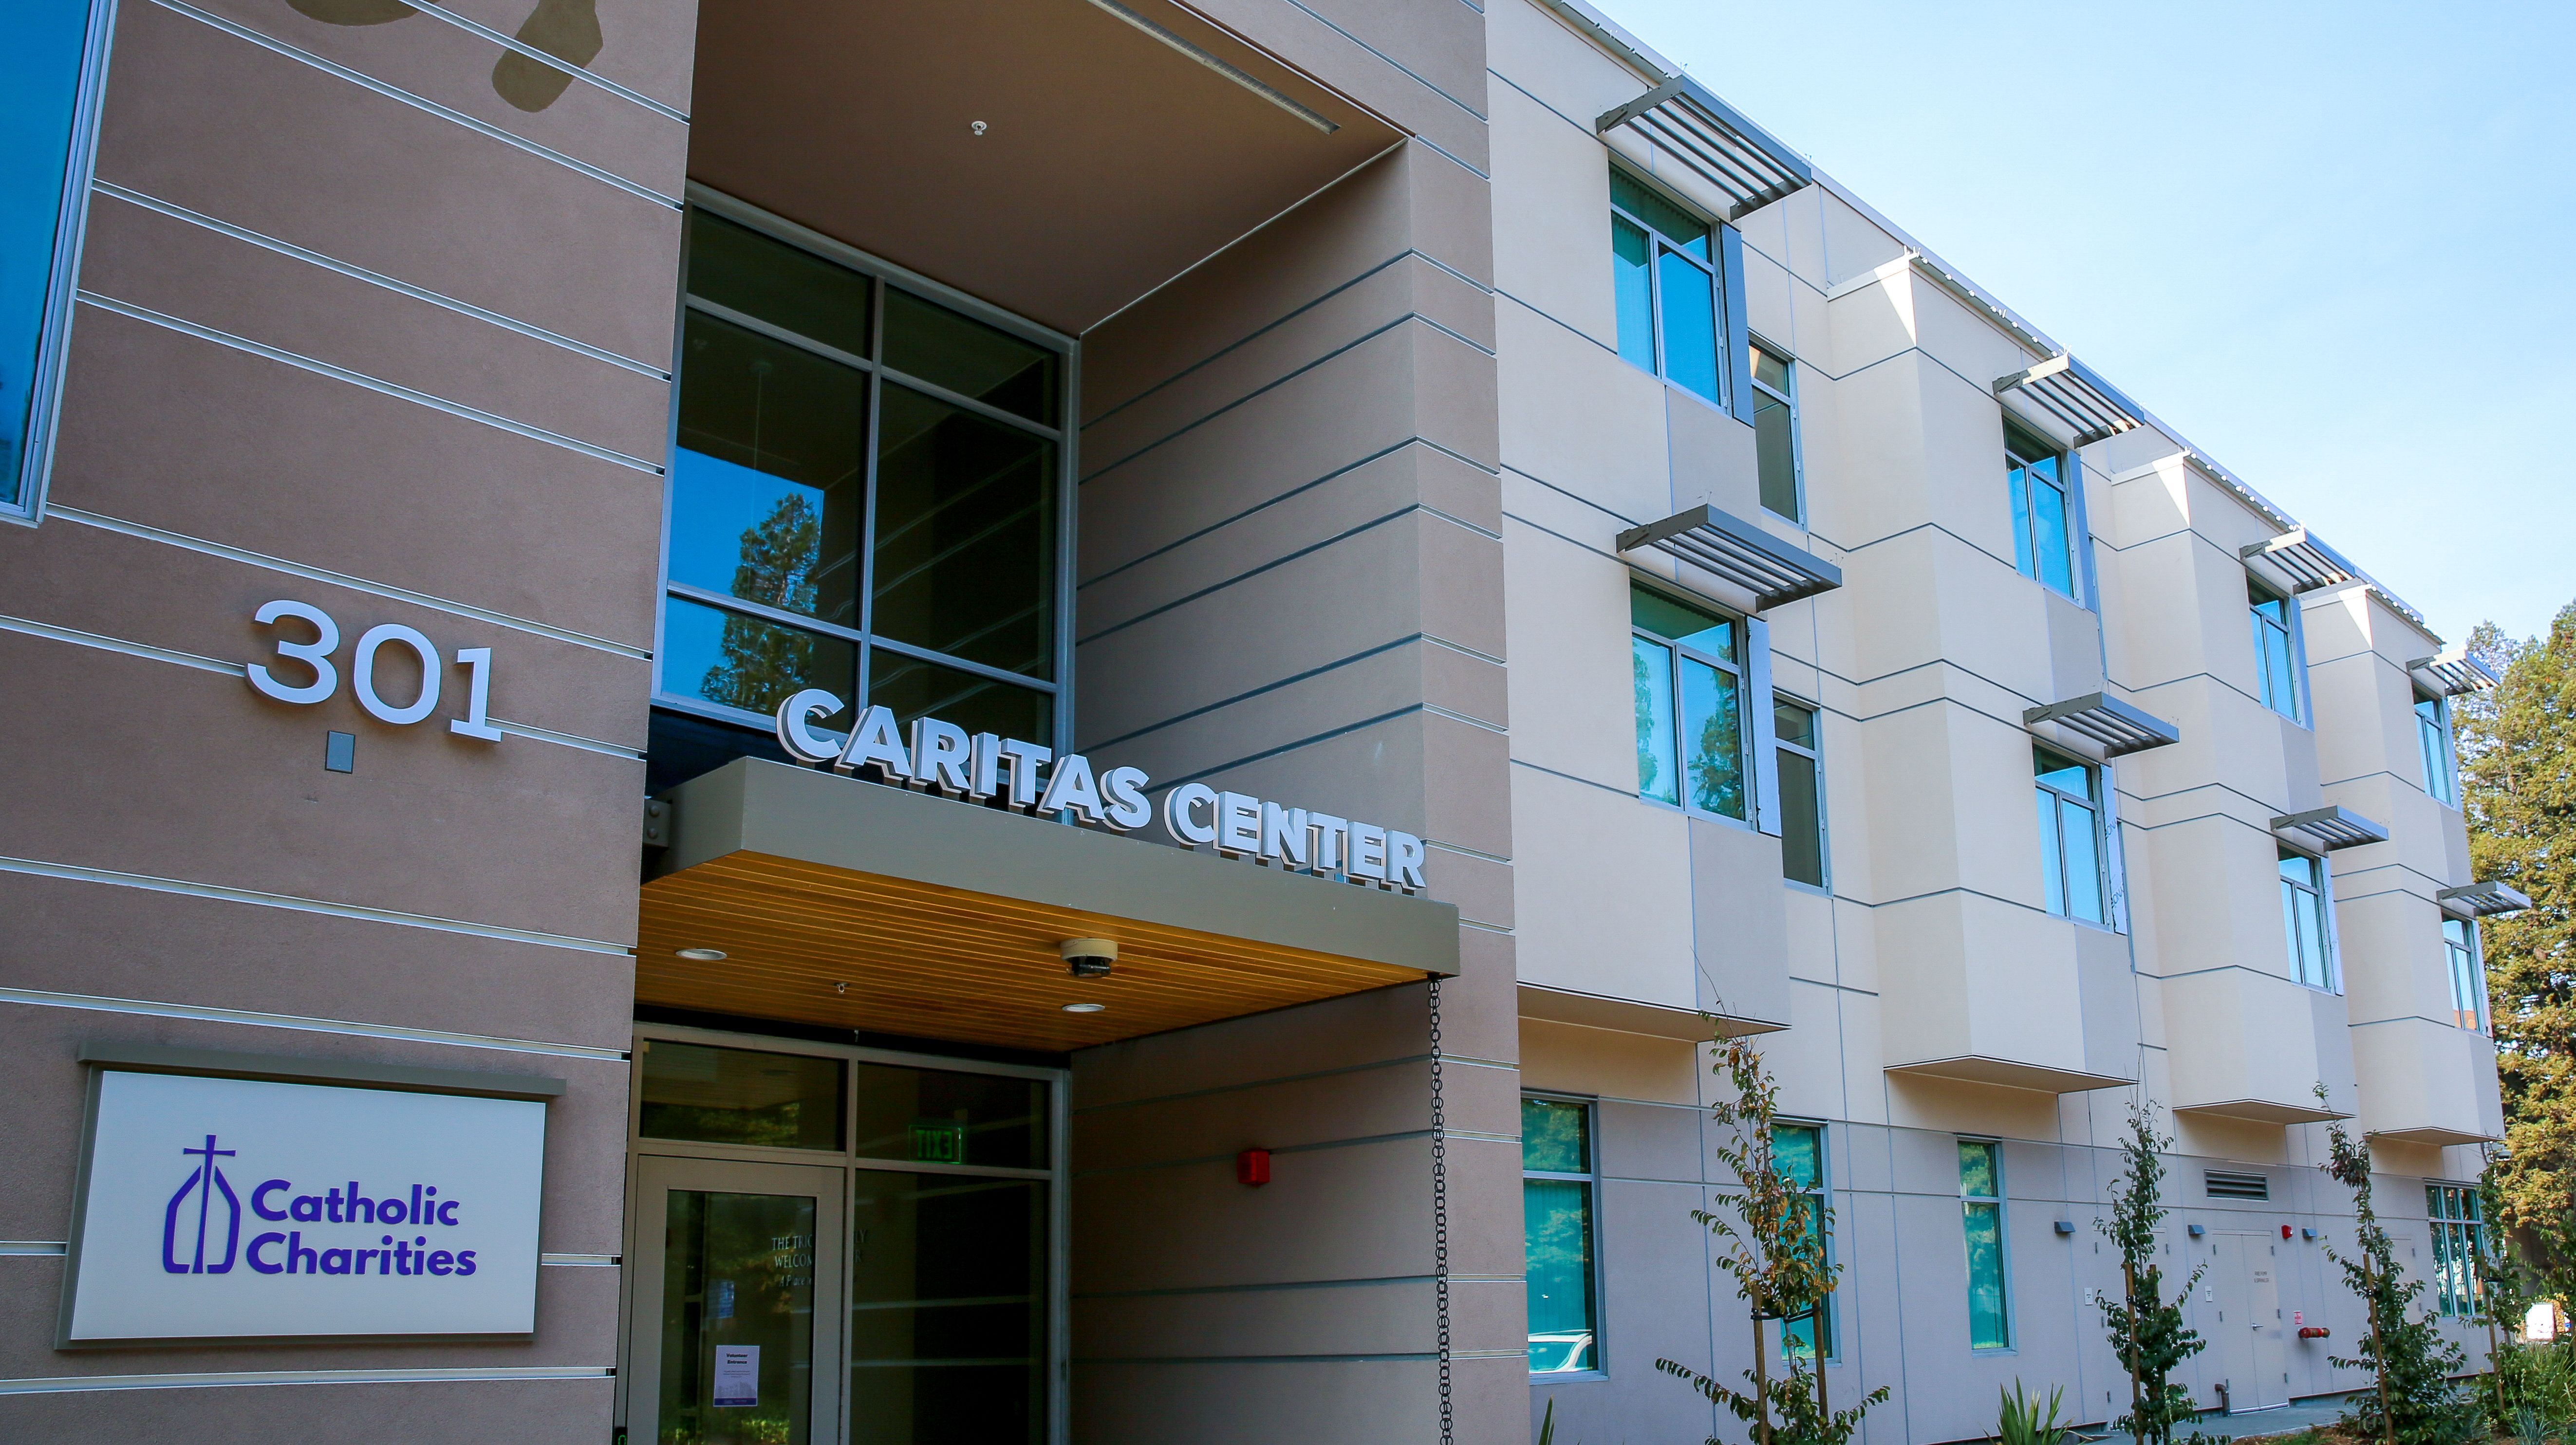 Press Democrat: Catholic Charities’ long-awaited $53 million Santa Rosa homeless services hub, Caritas Center, opens